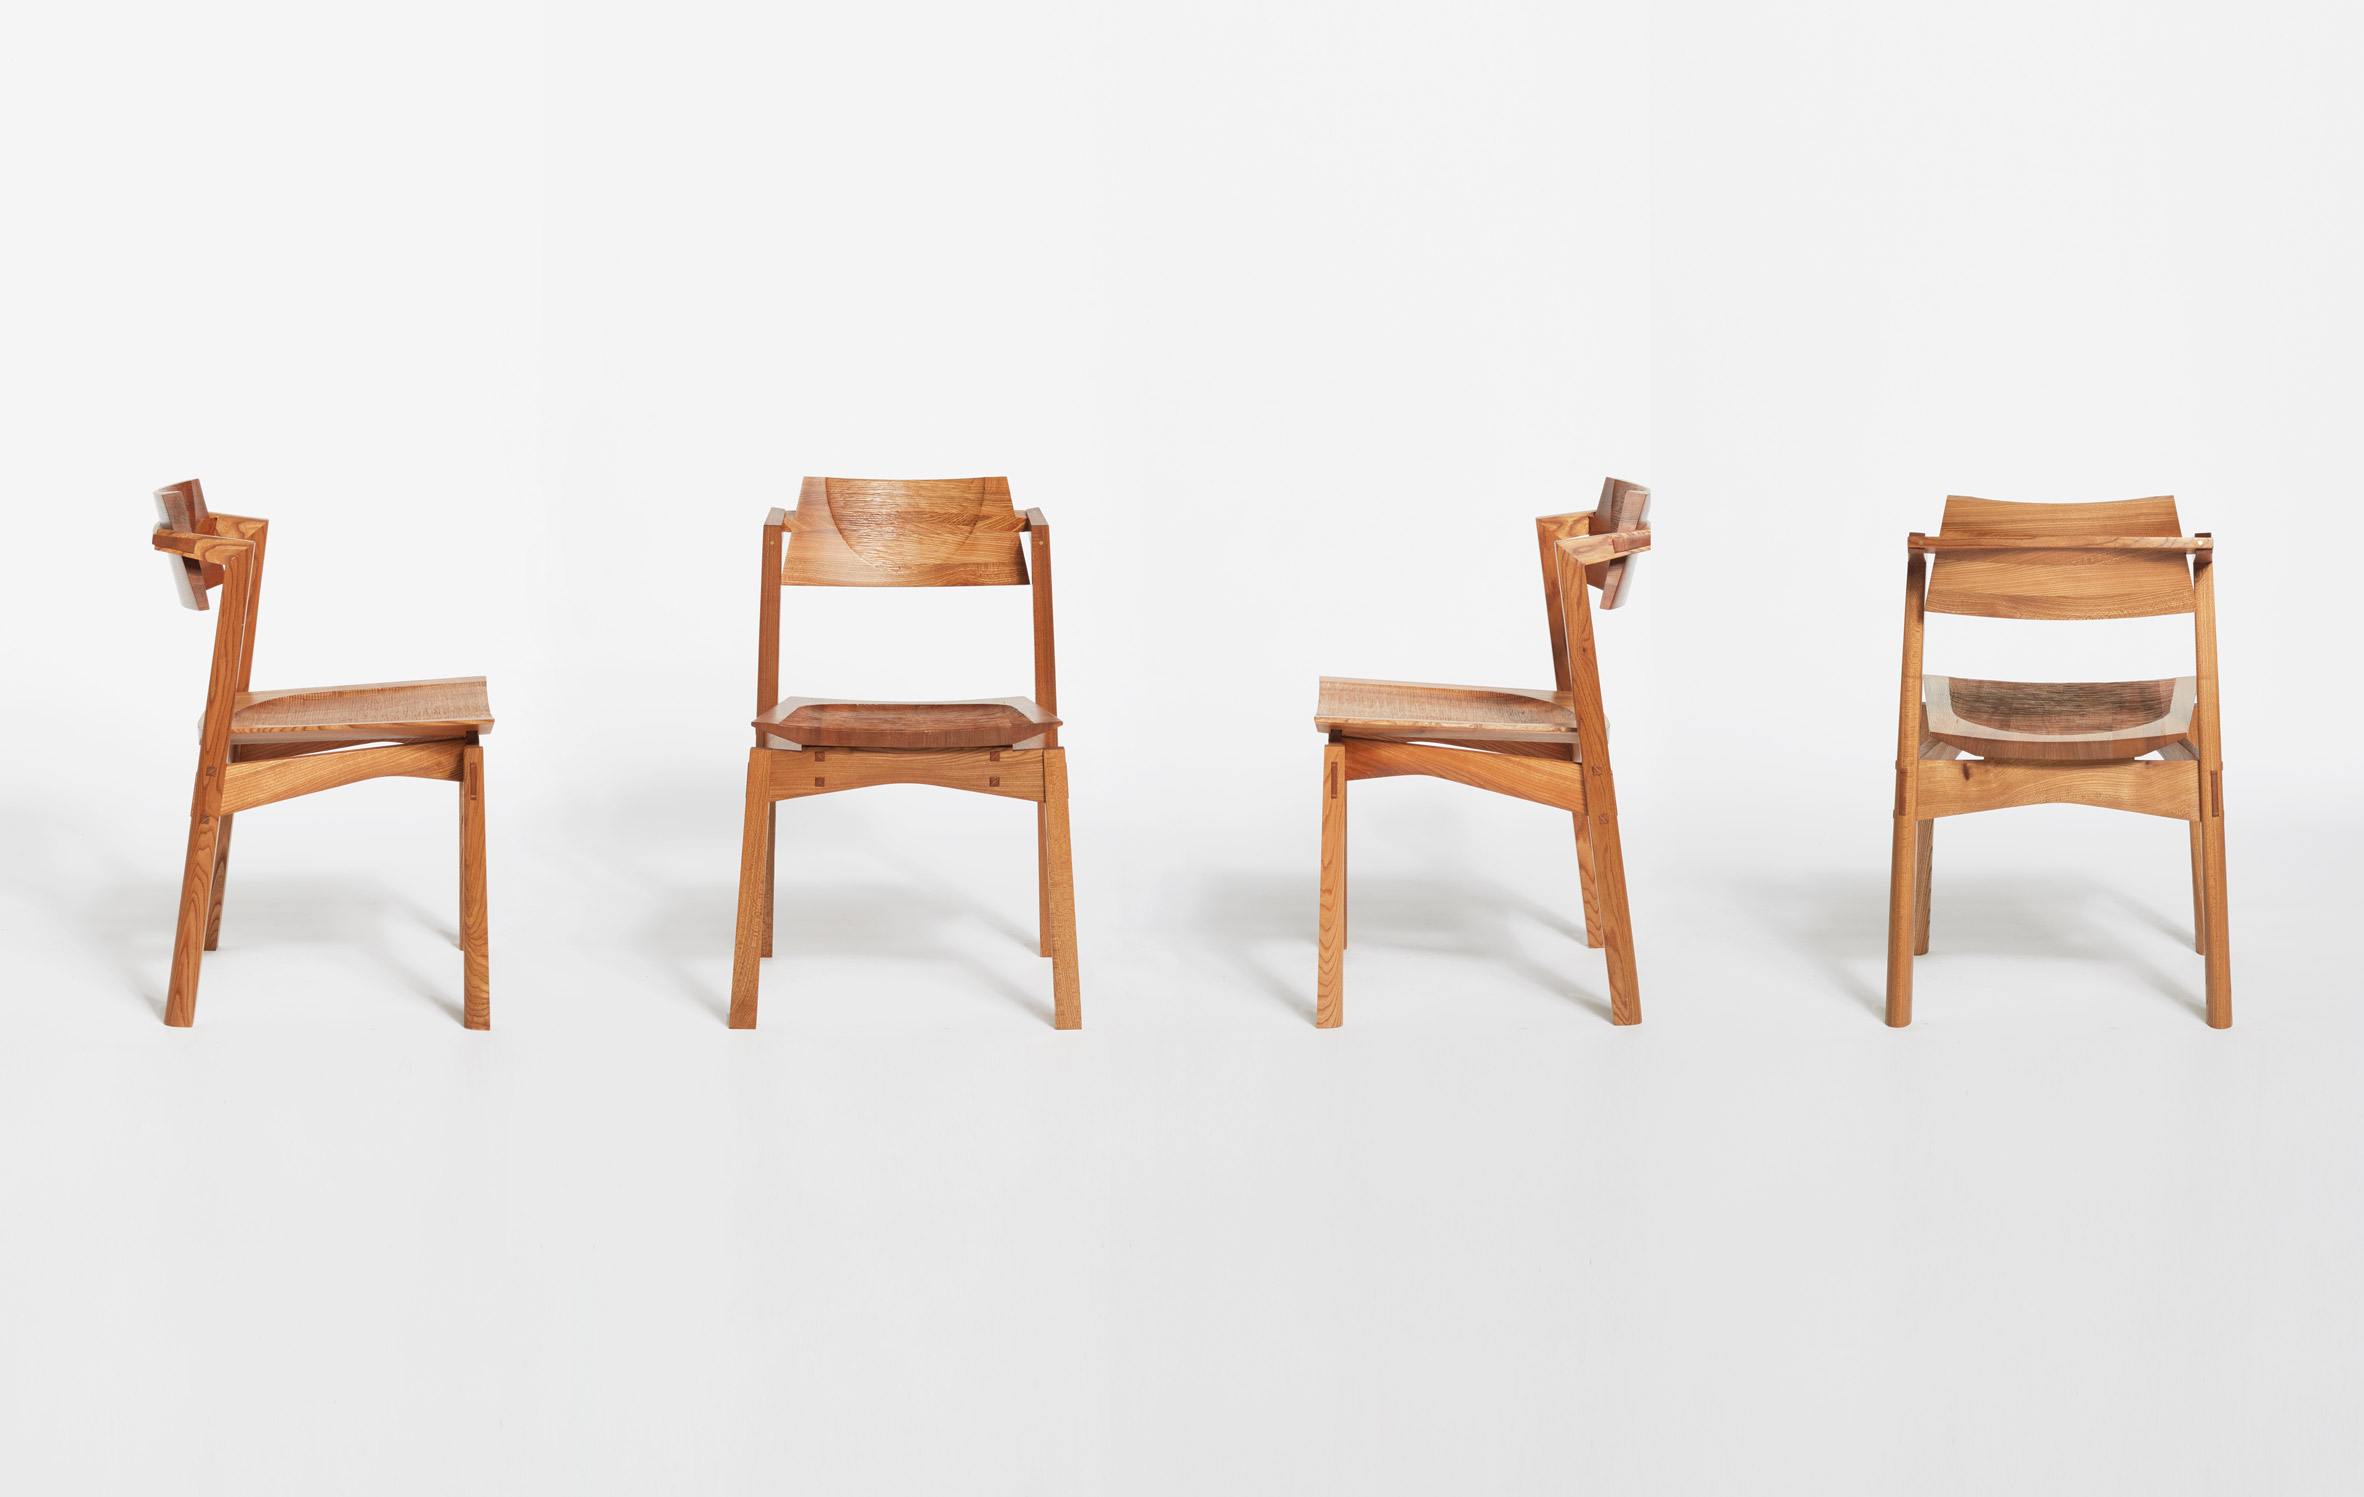 the-coffee-ceremony-hugh-miller-furniture-design-chair-table_dezeen_2364_col_16